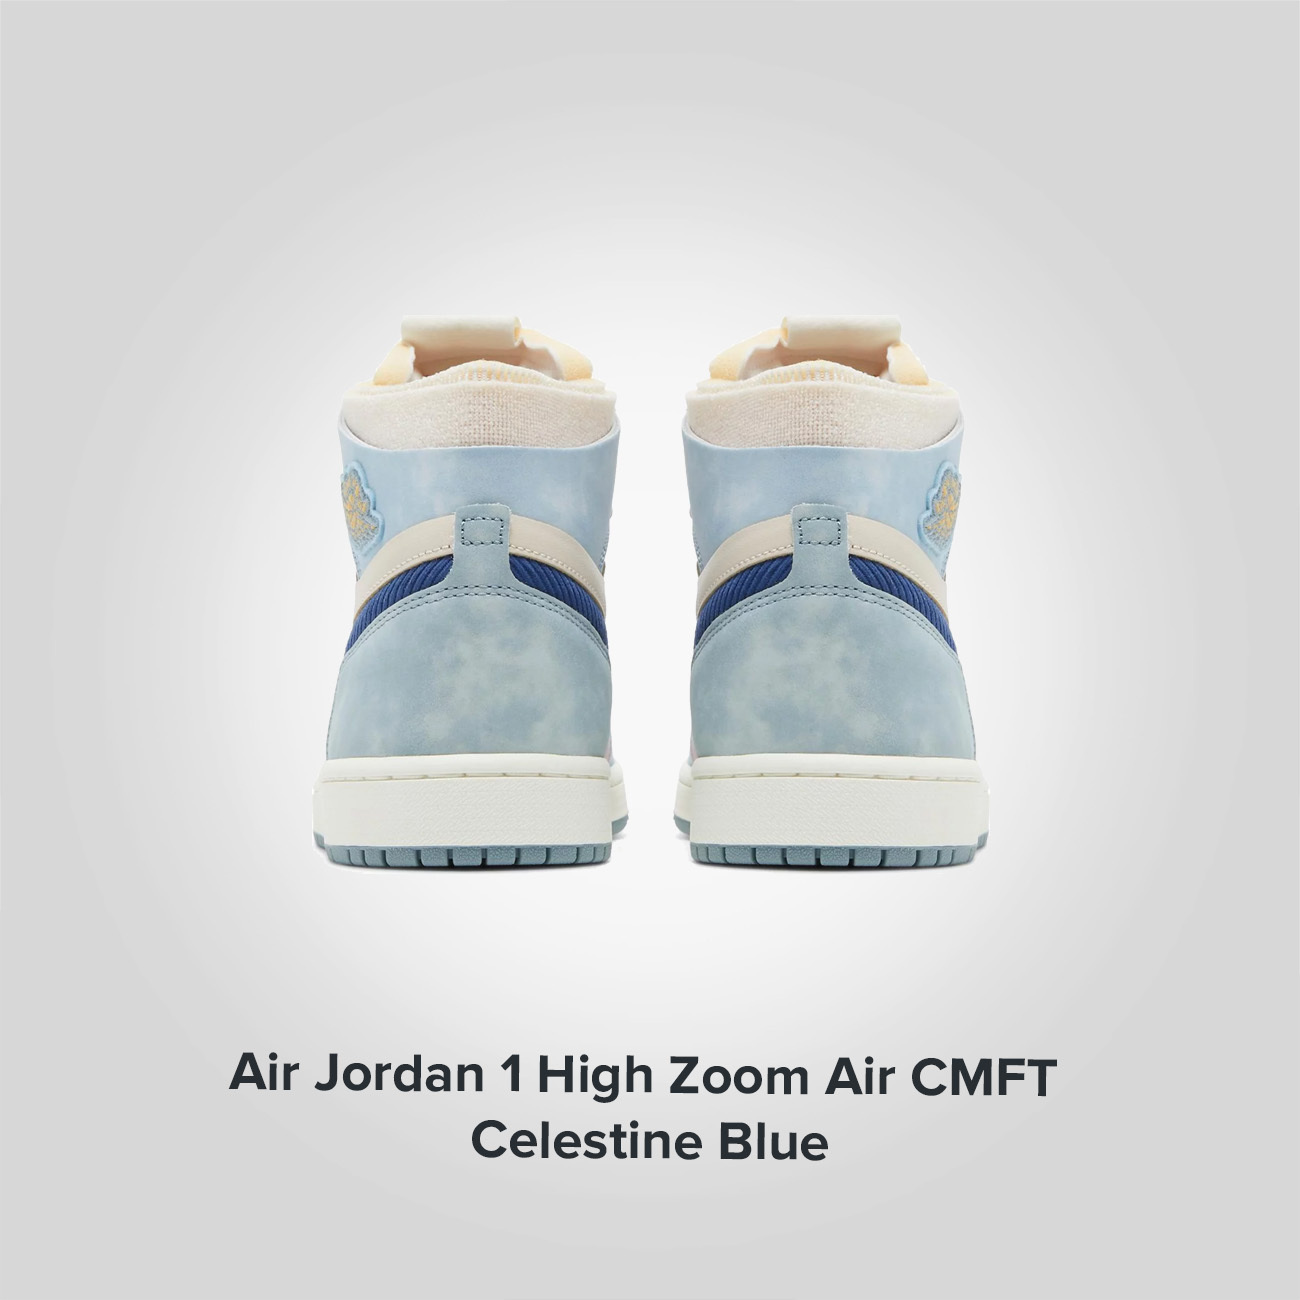 Jordan 1 High Zoom Air CMFT Celestine Blue